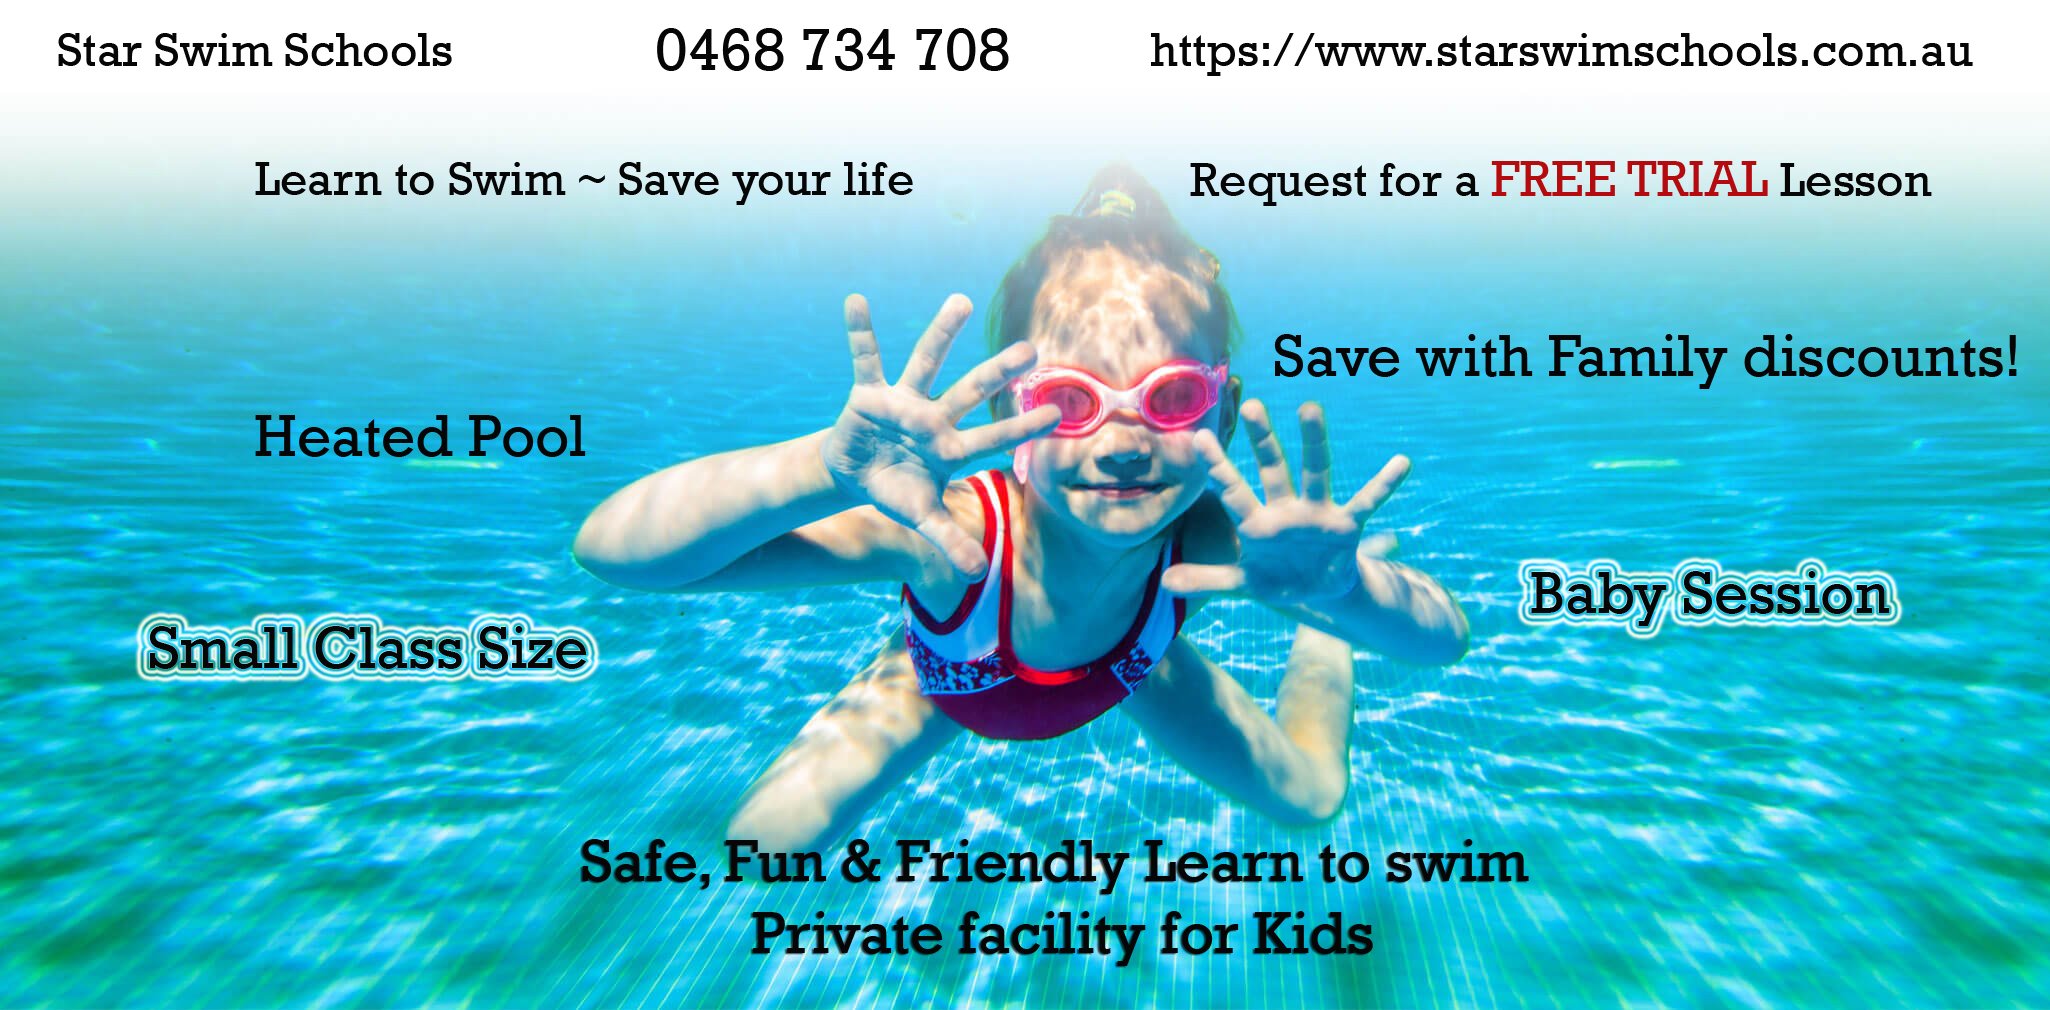 Star Swim Schools cover